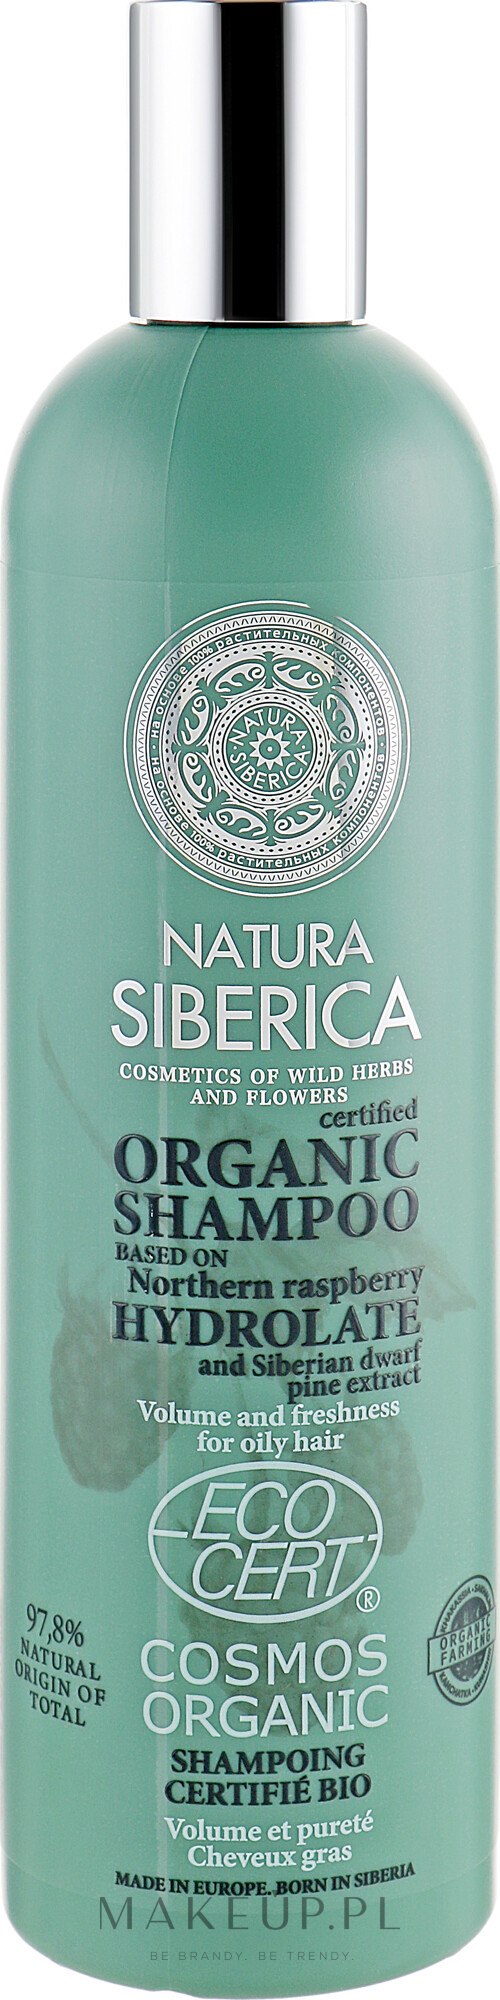 natura siberica szampon wozaz